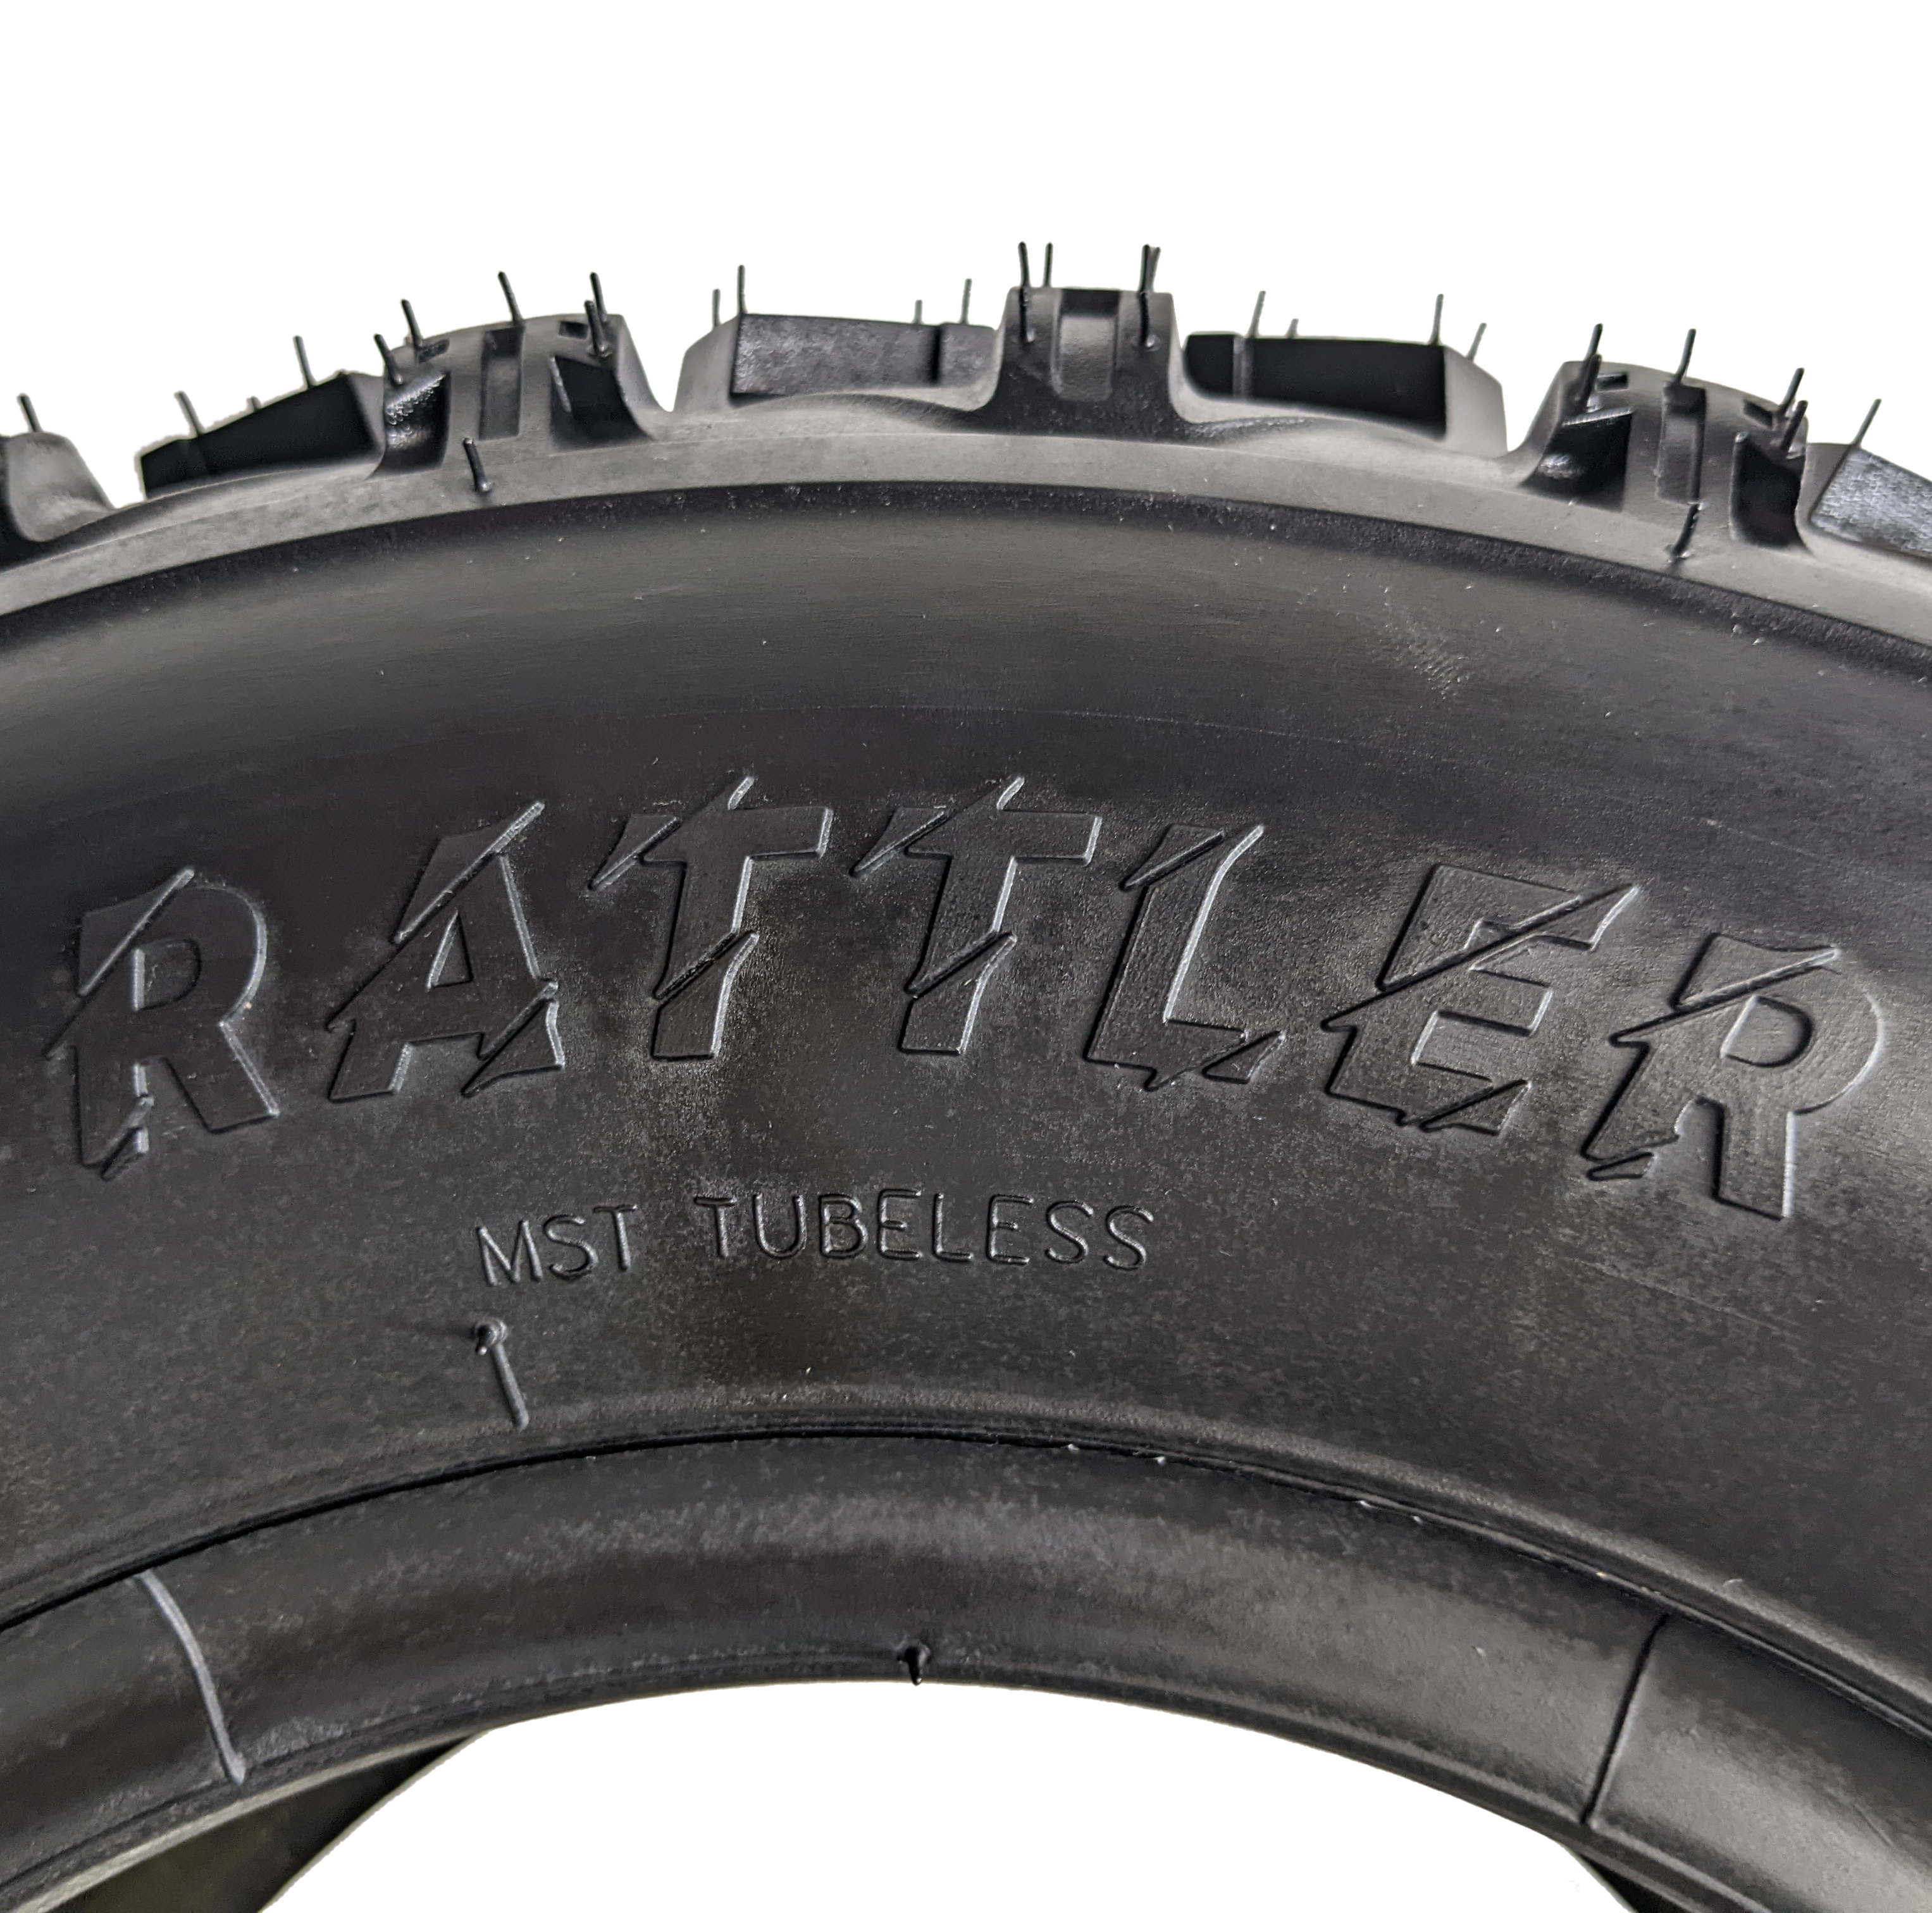 22x11-9 Rattler Rear ATV Tire - Click Image to Close